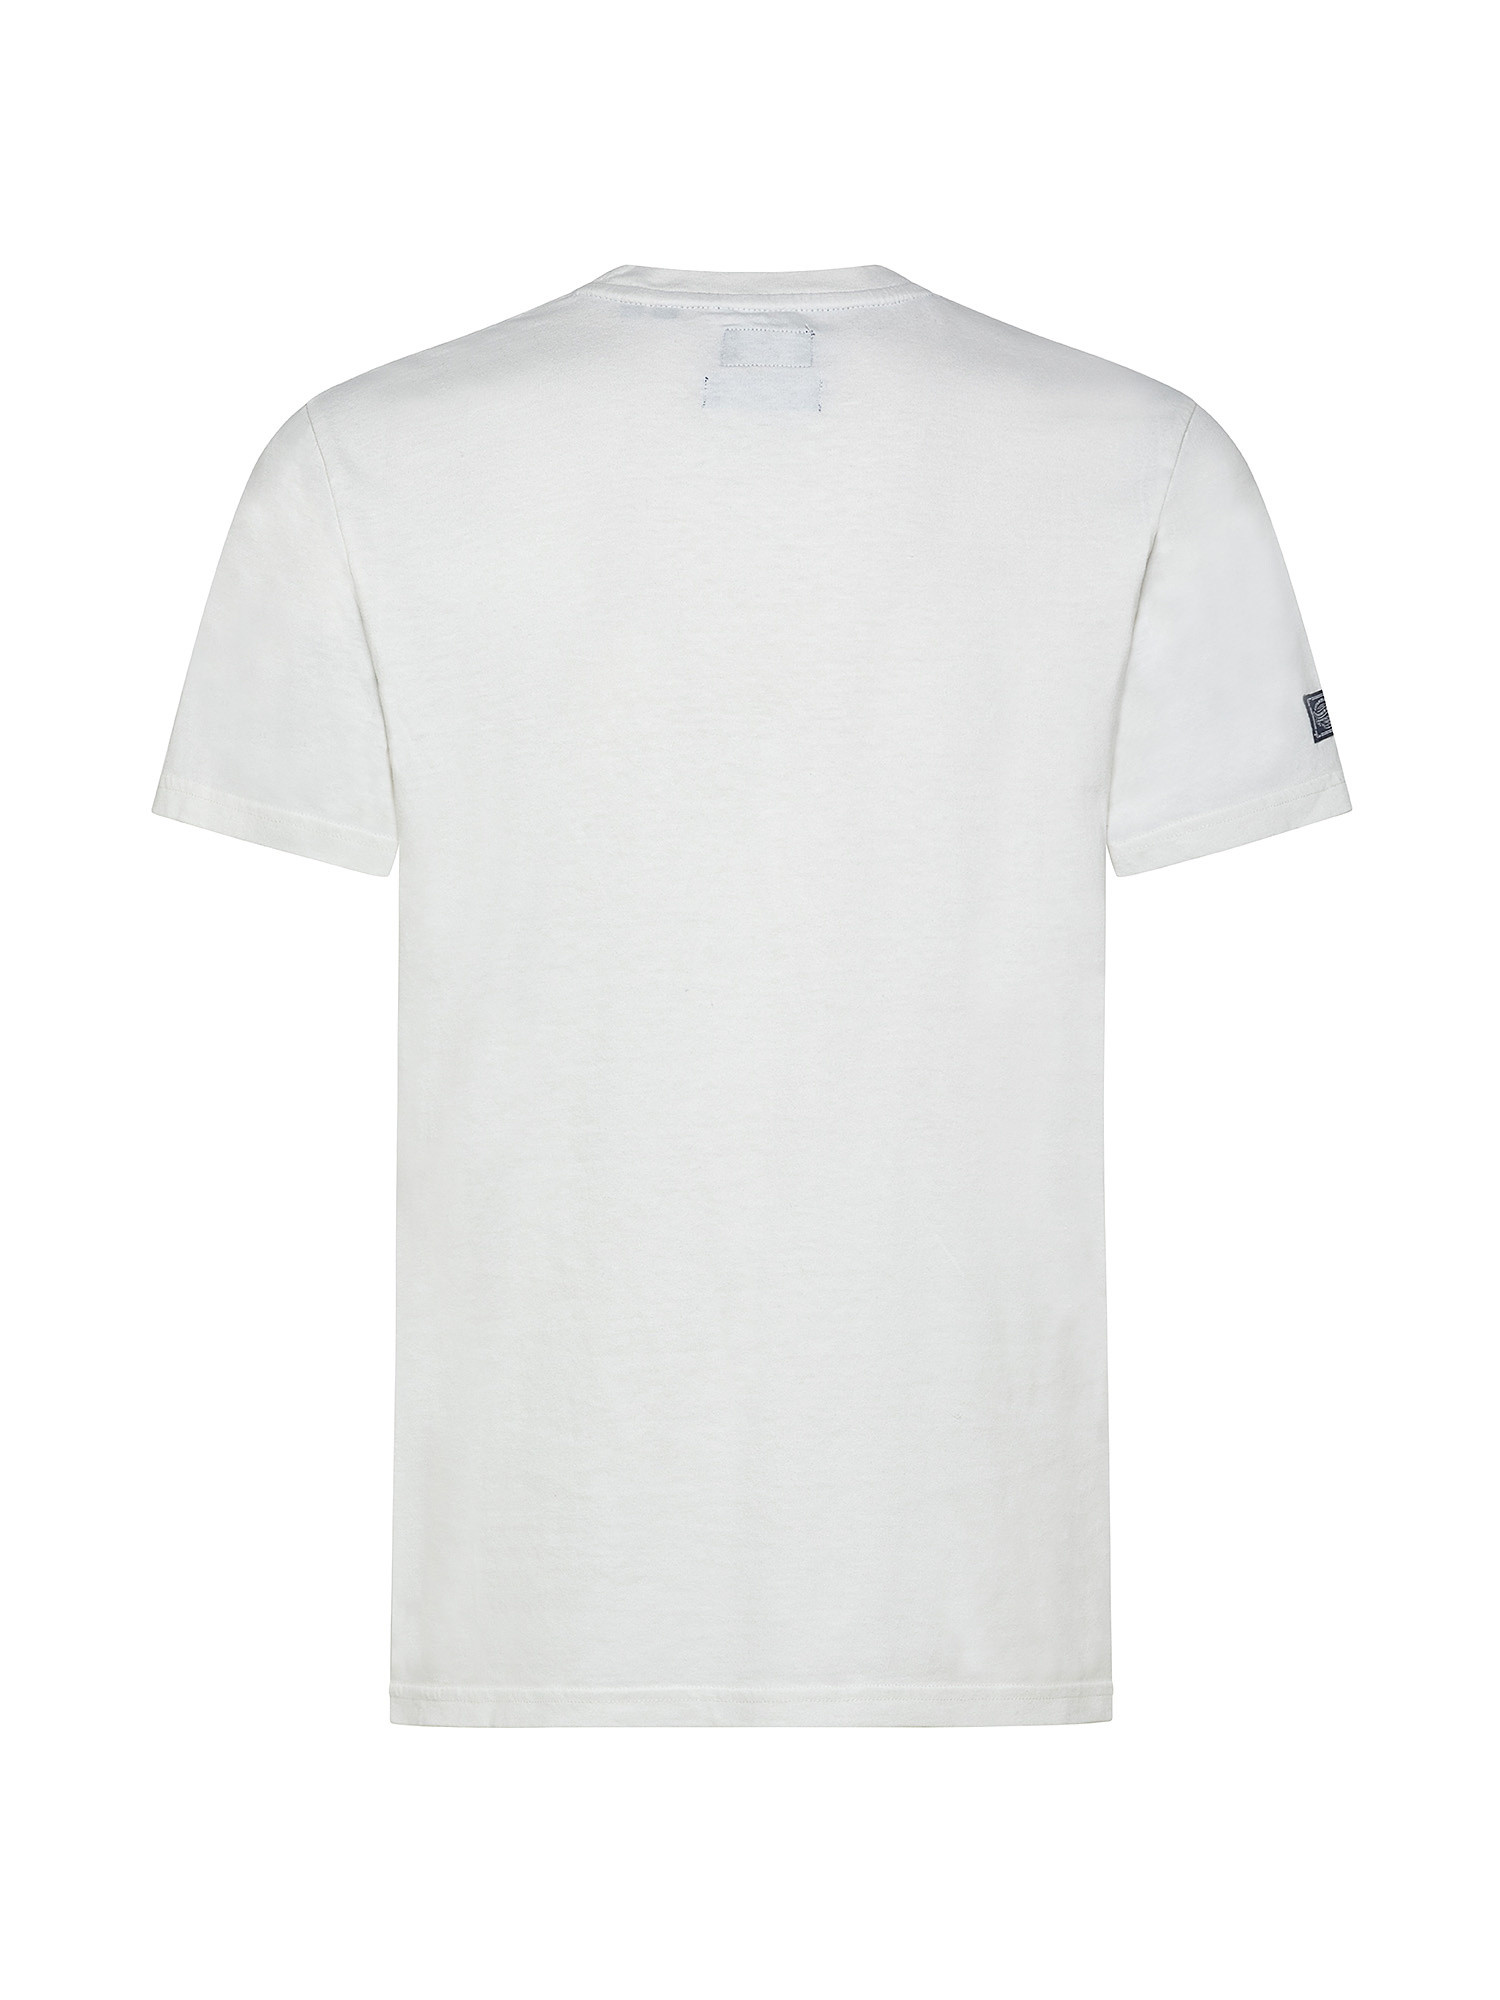 Vintage logo t-shirt, White, large image number 1